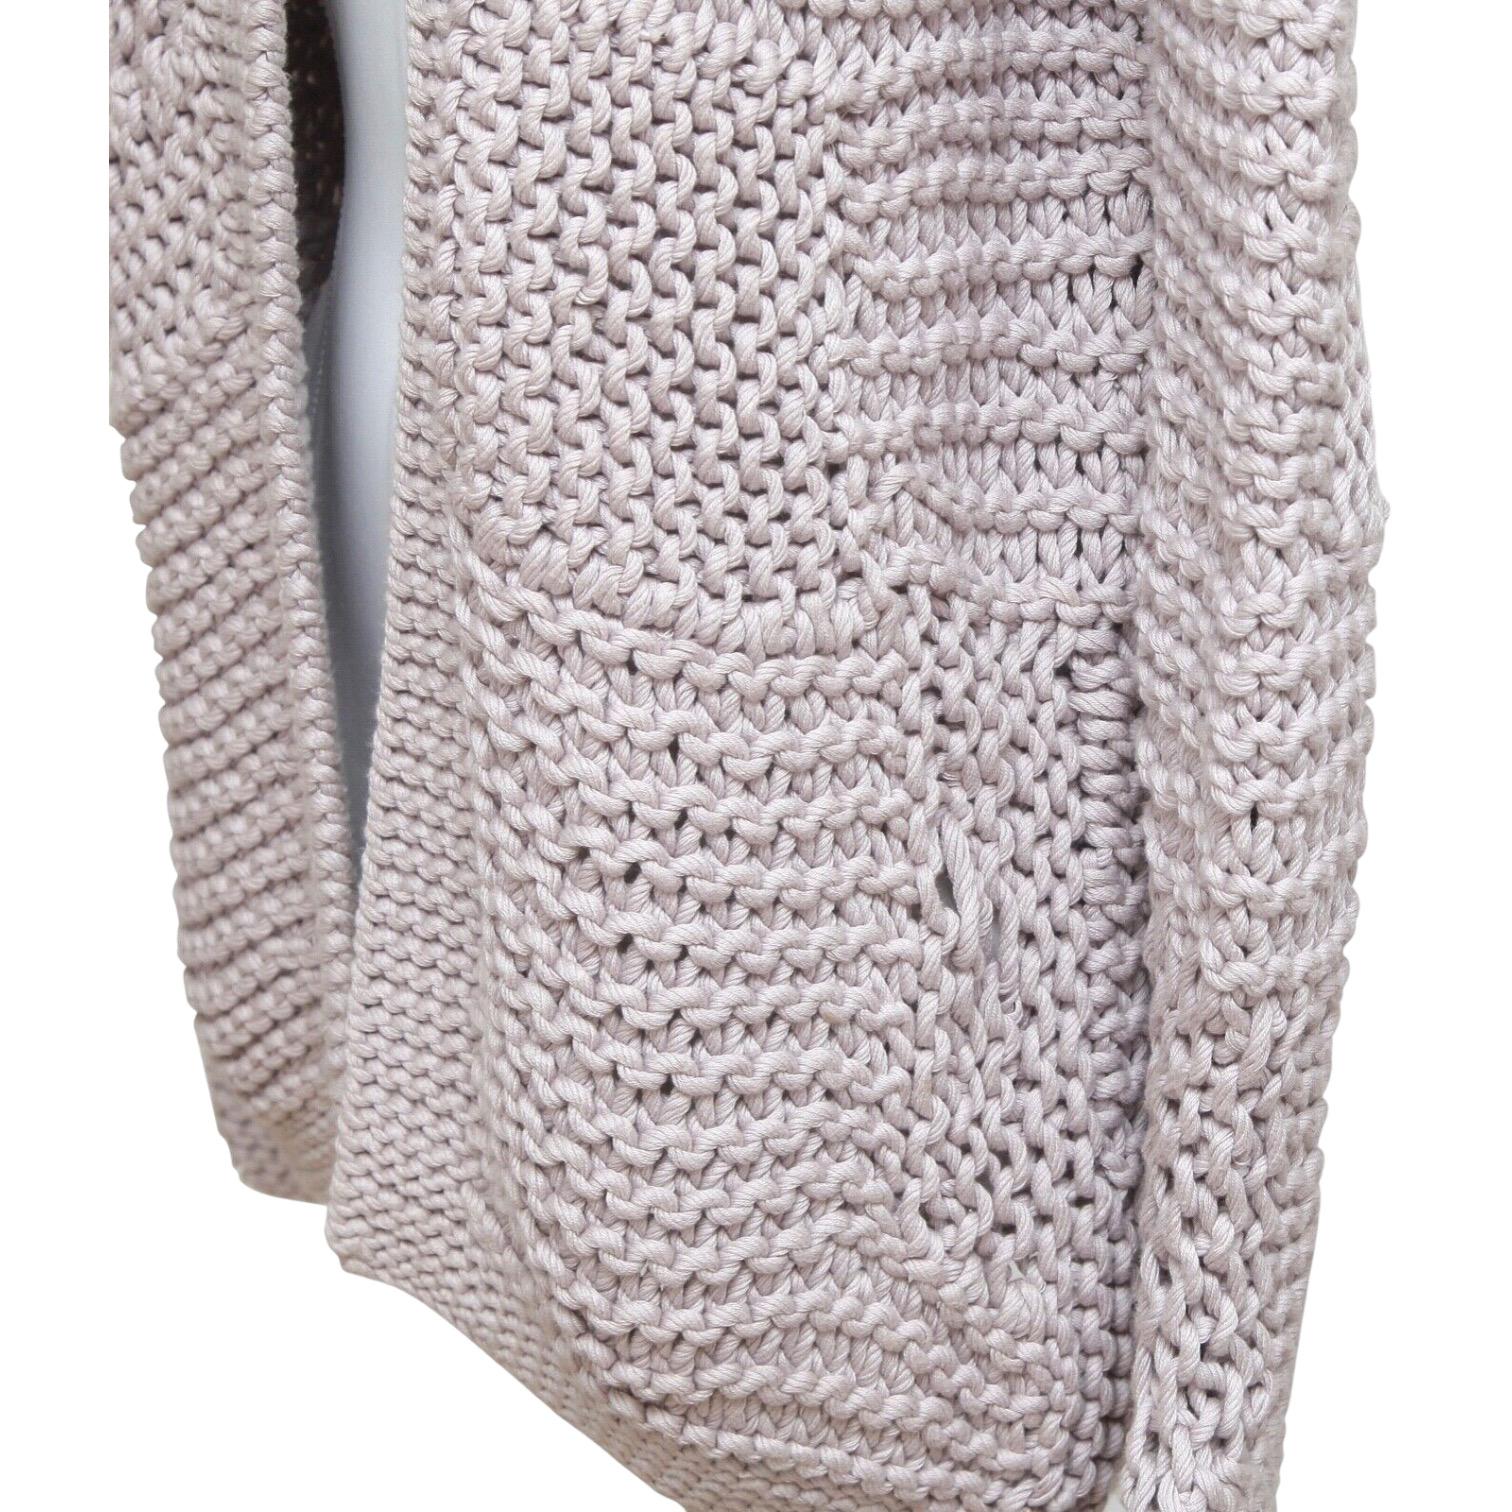 CHLOE Cardigan Sweater Knit Grey Lavender Open Front Long Sleeve Sz S 2008 For Sale 2